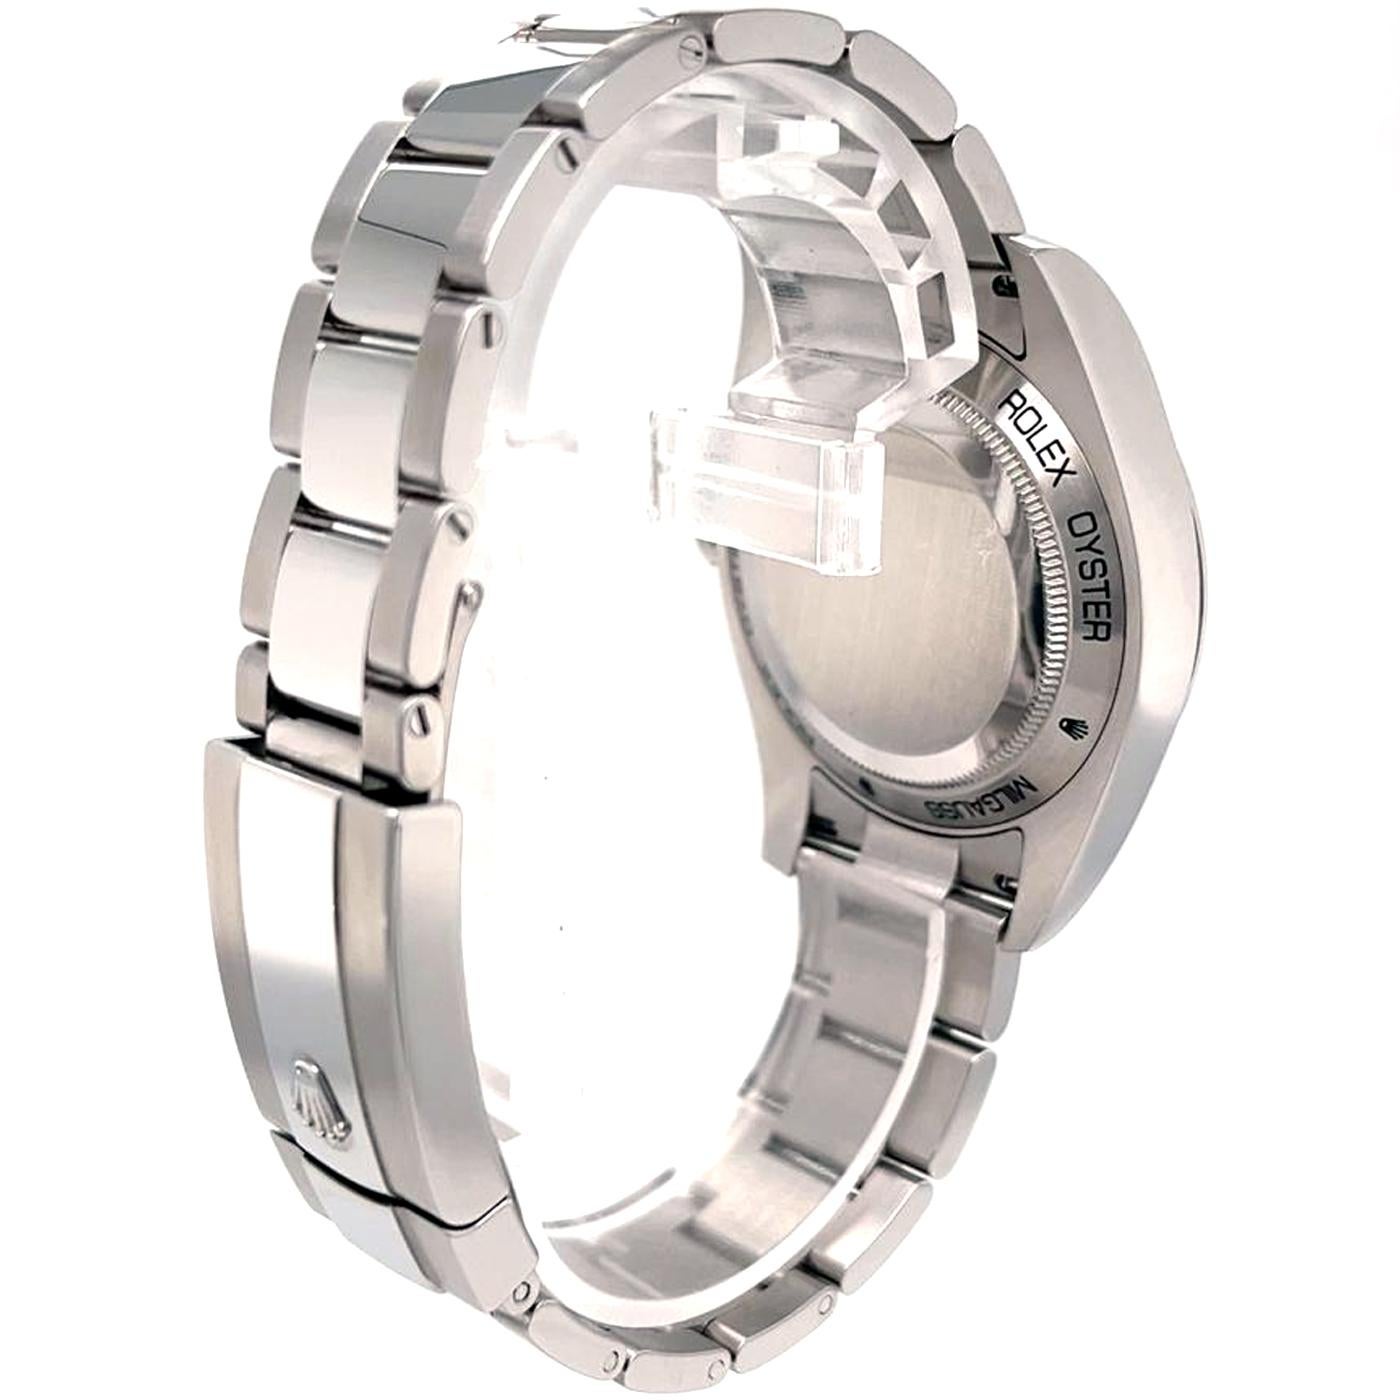 Rolex Milgauss Black Dial Green Crystal Stainless Steel Watch 116400GV 2